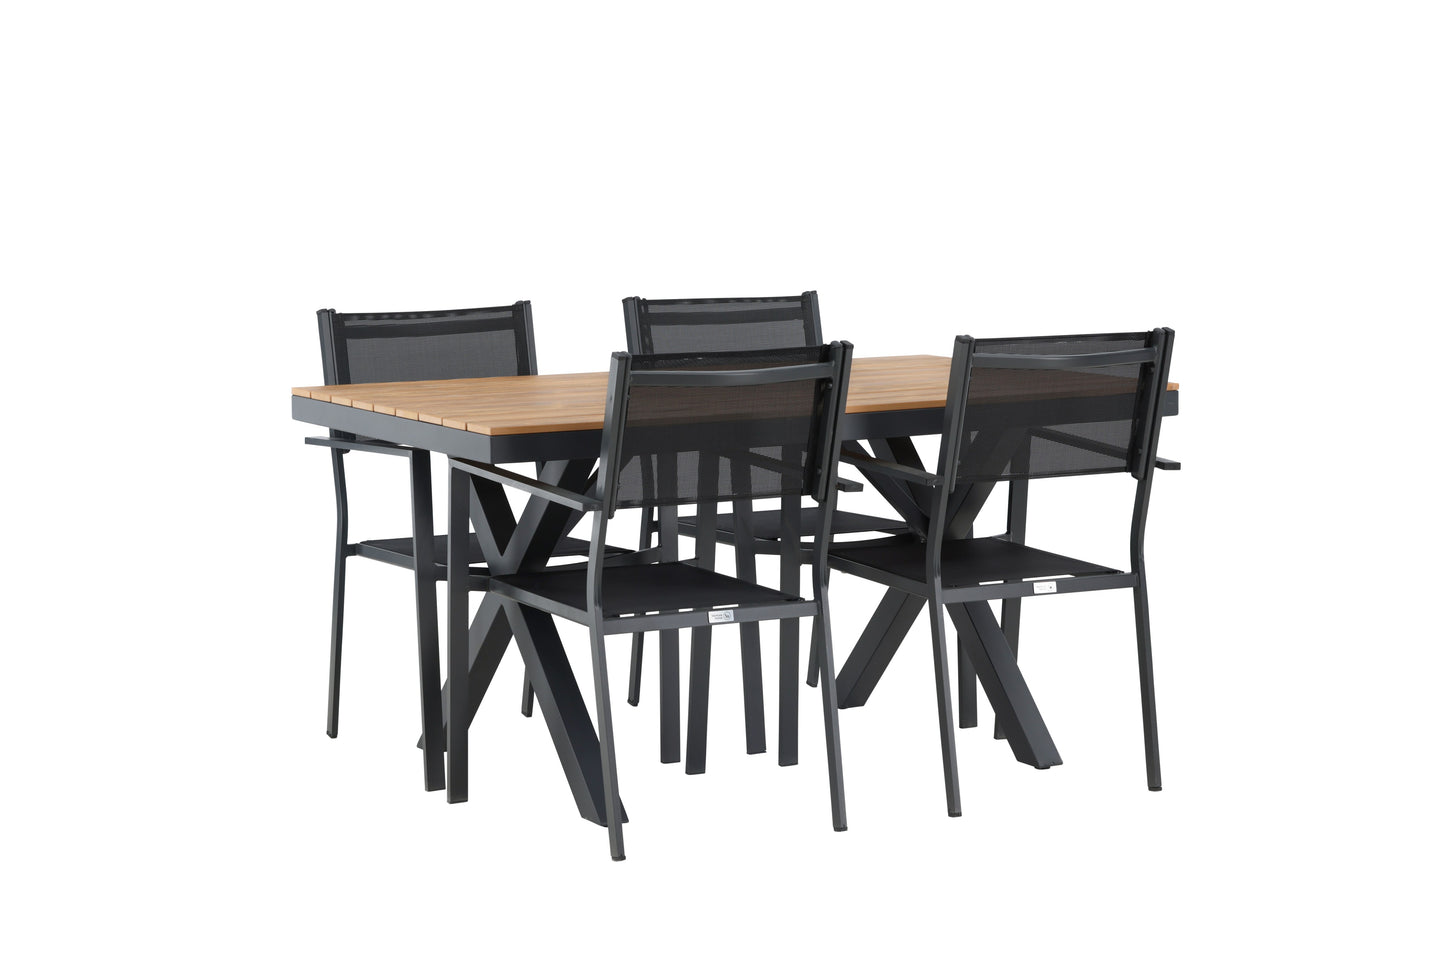 Garcia - Spisebord, Aluminium - Sort / Rektangulær 90*150* + Copacabana Stabelbar stol - Sort